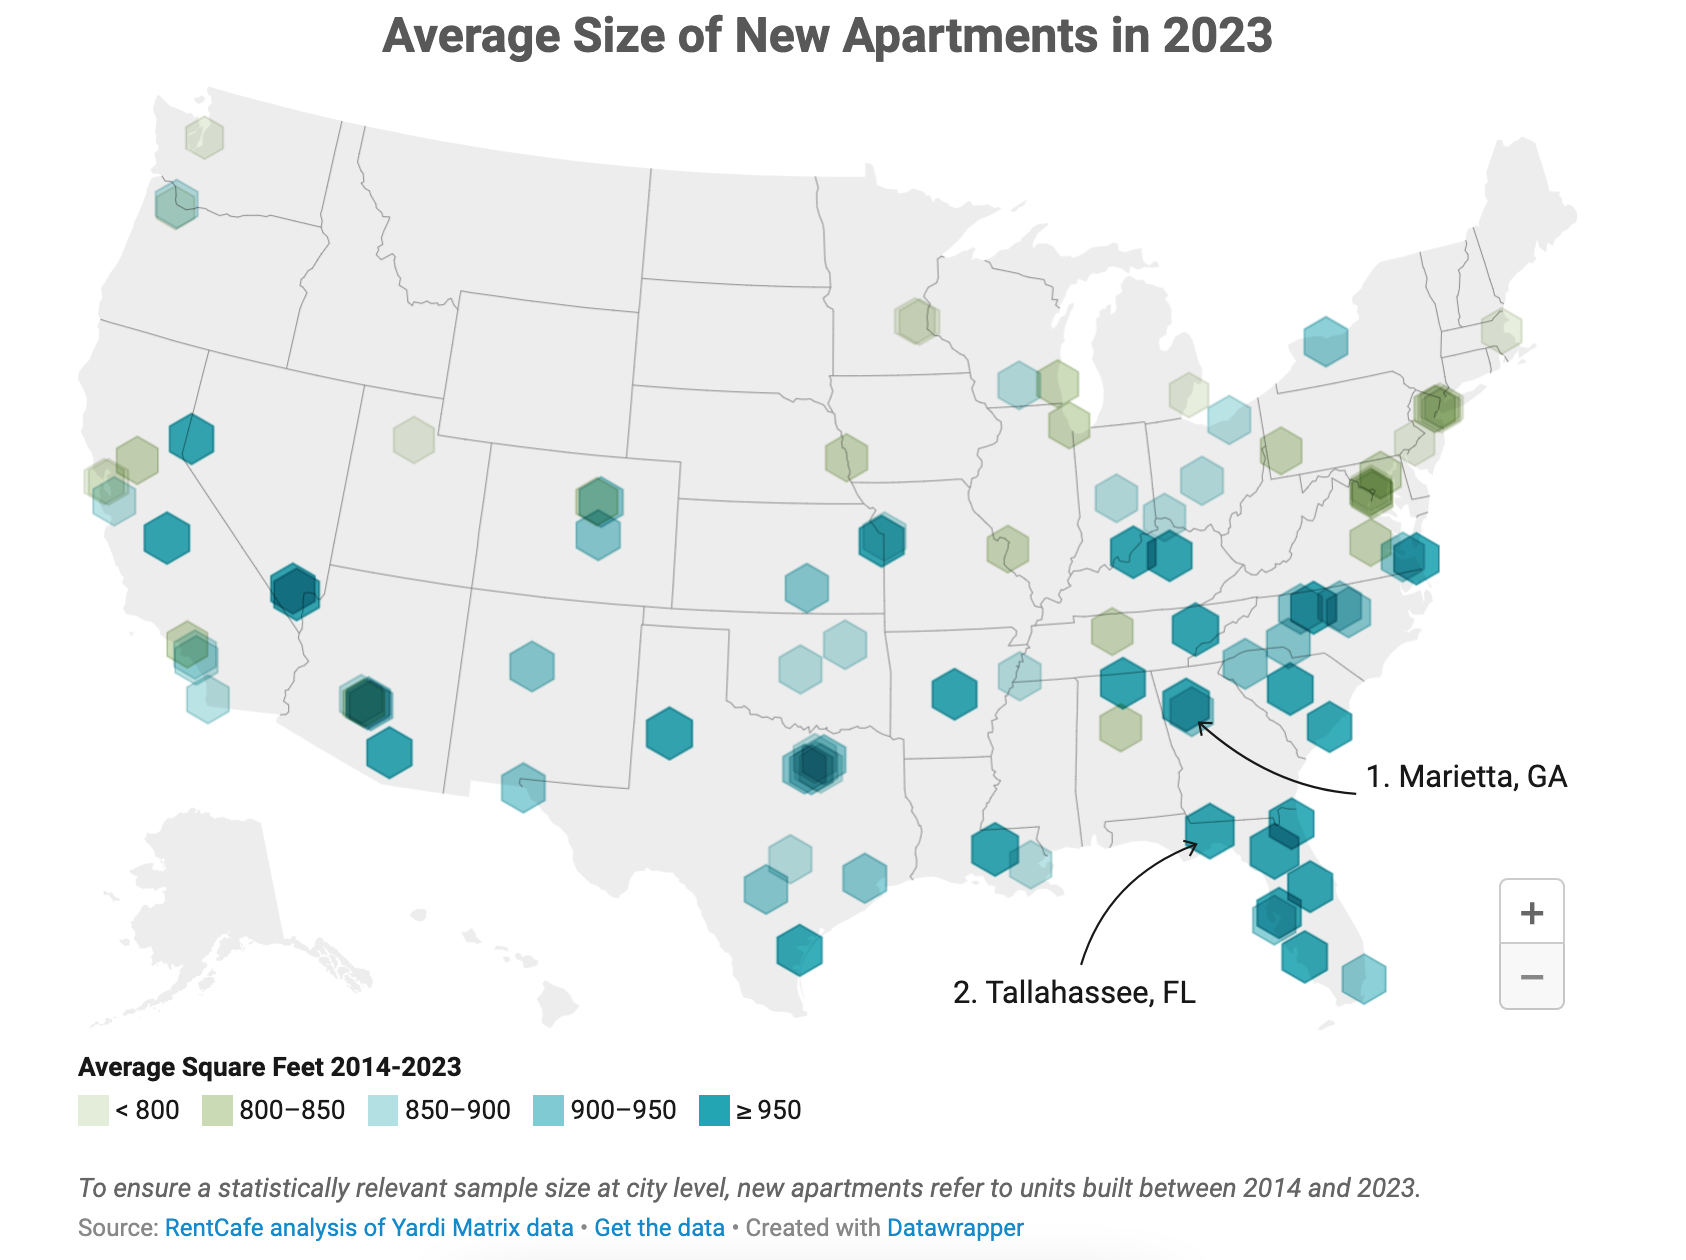 Average apartment size 2023 across U.S.